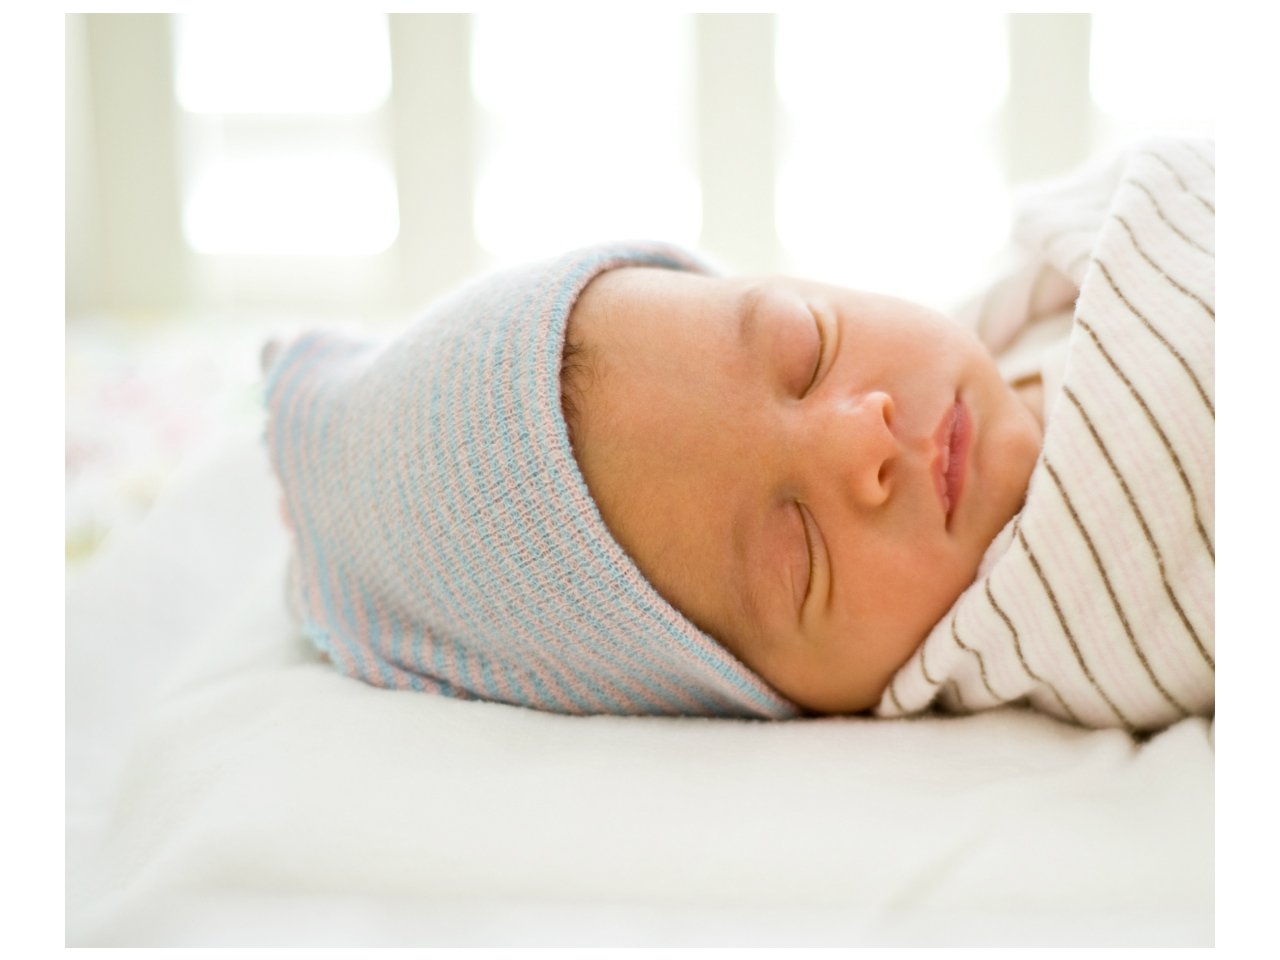 Newborn sleeps safely in crib